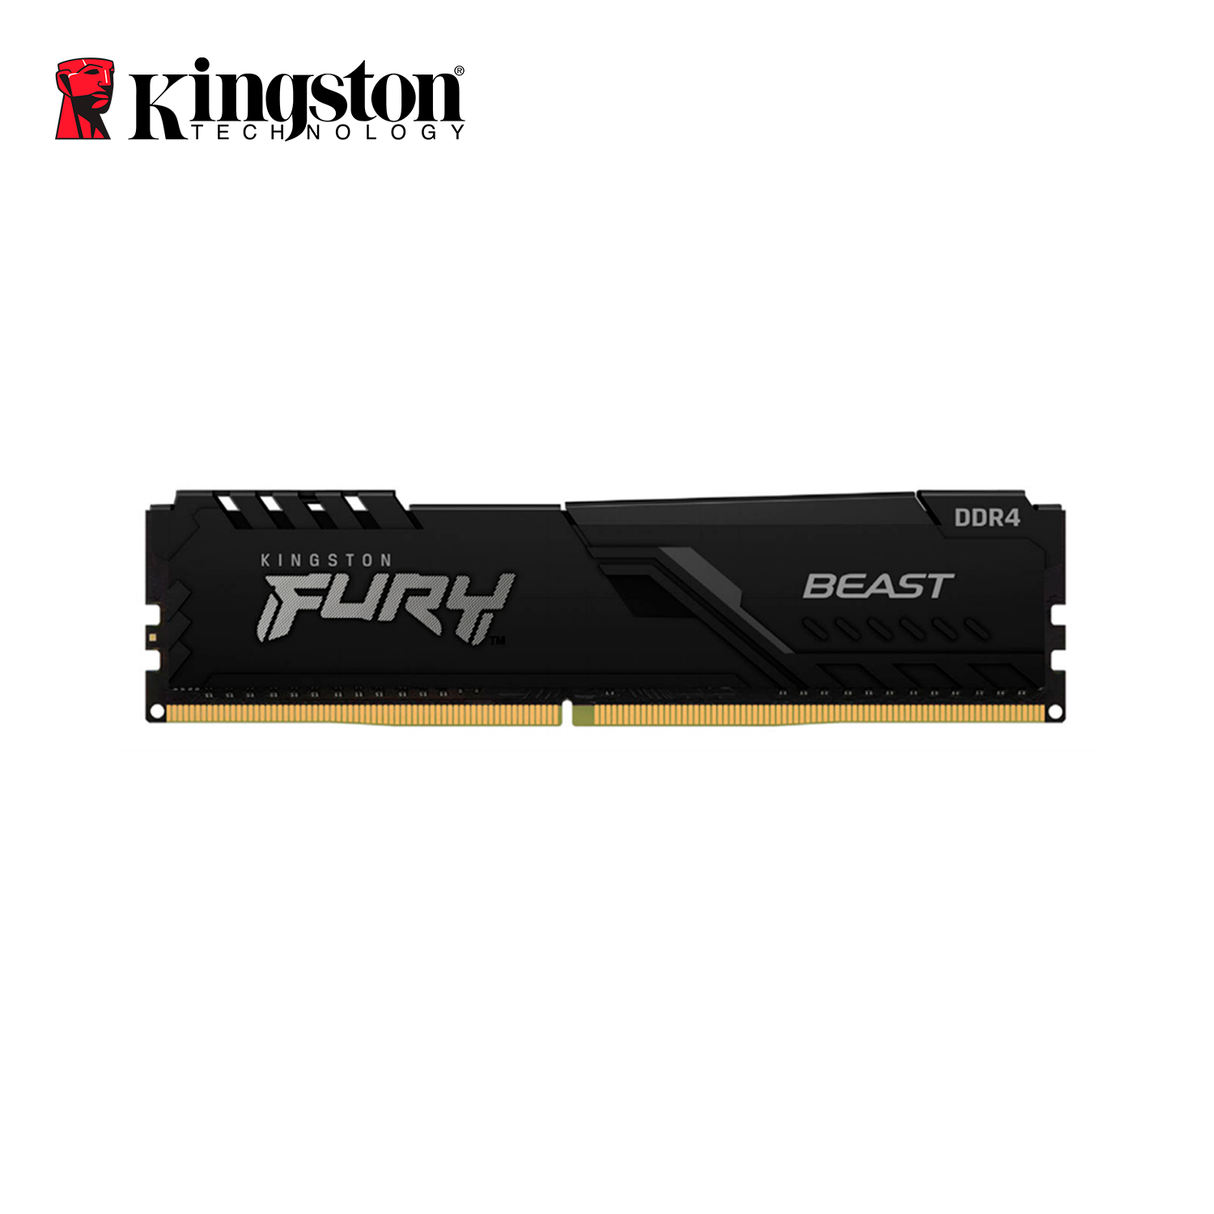 Memoria Para PC Kingston Fury Black, 8GB DDR4 2666 MHz, PC4-21300, CL16, 1.2V.